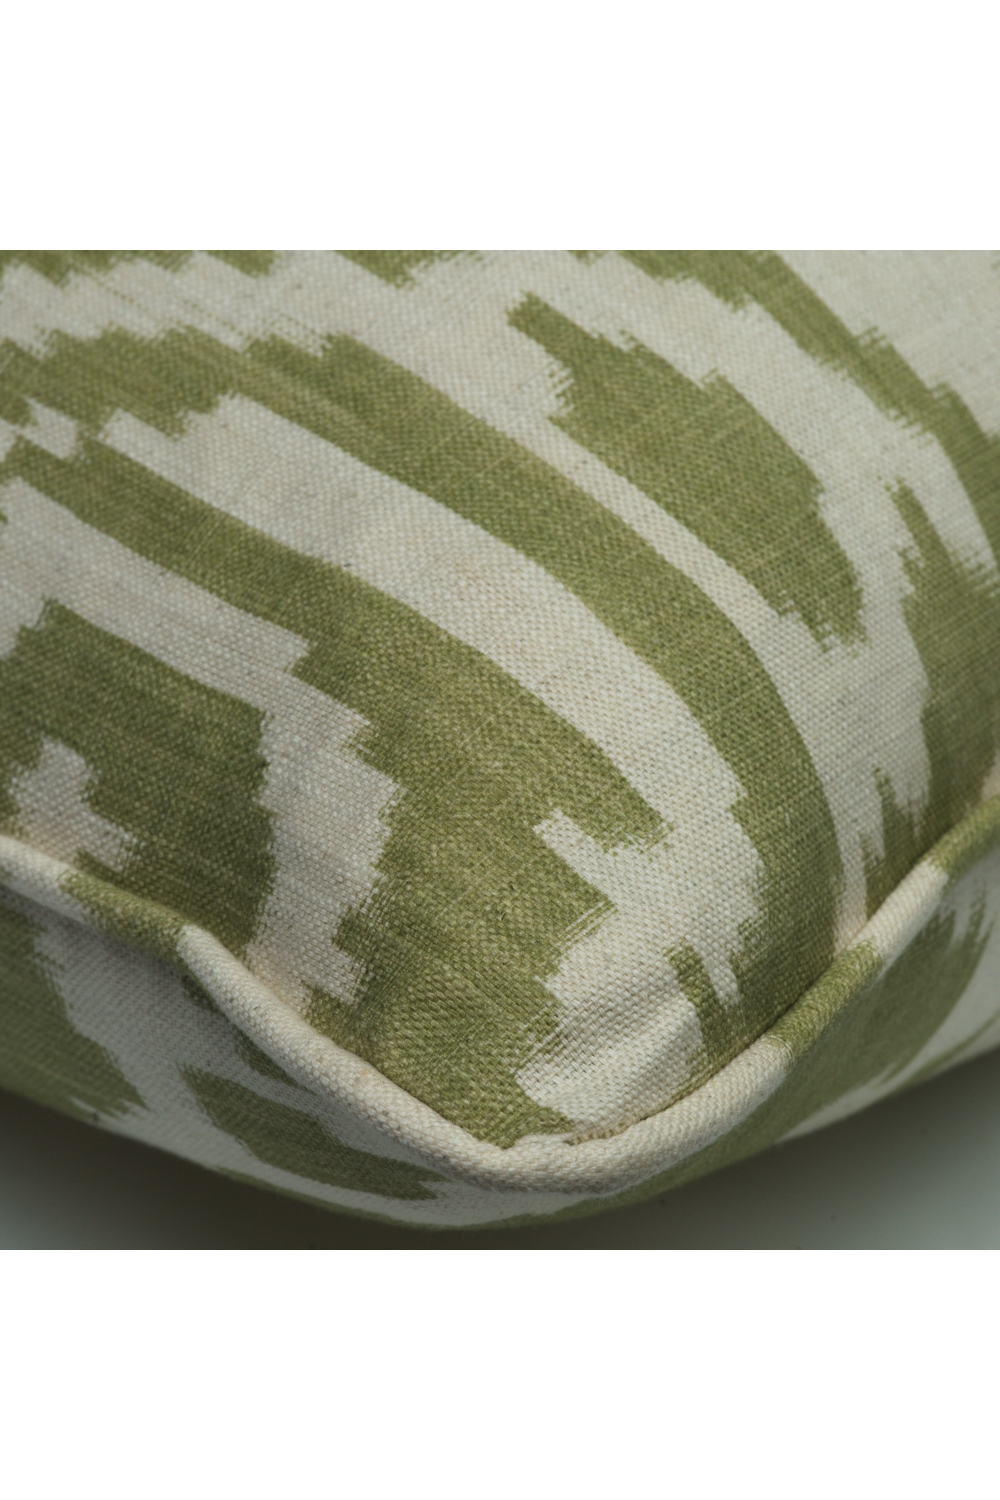 Ikat Patterned Pillow | Andrew Martin Otter | Oroa.com